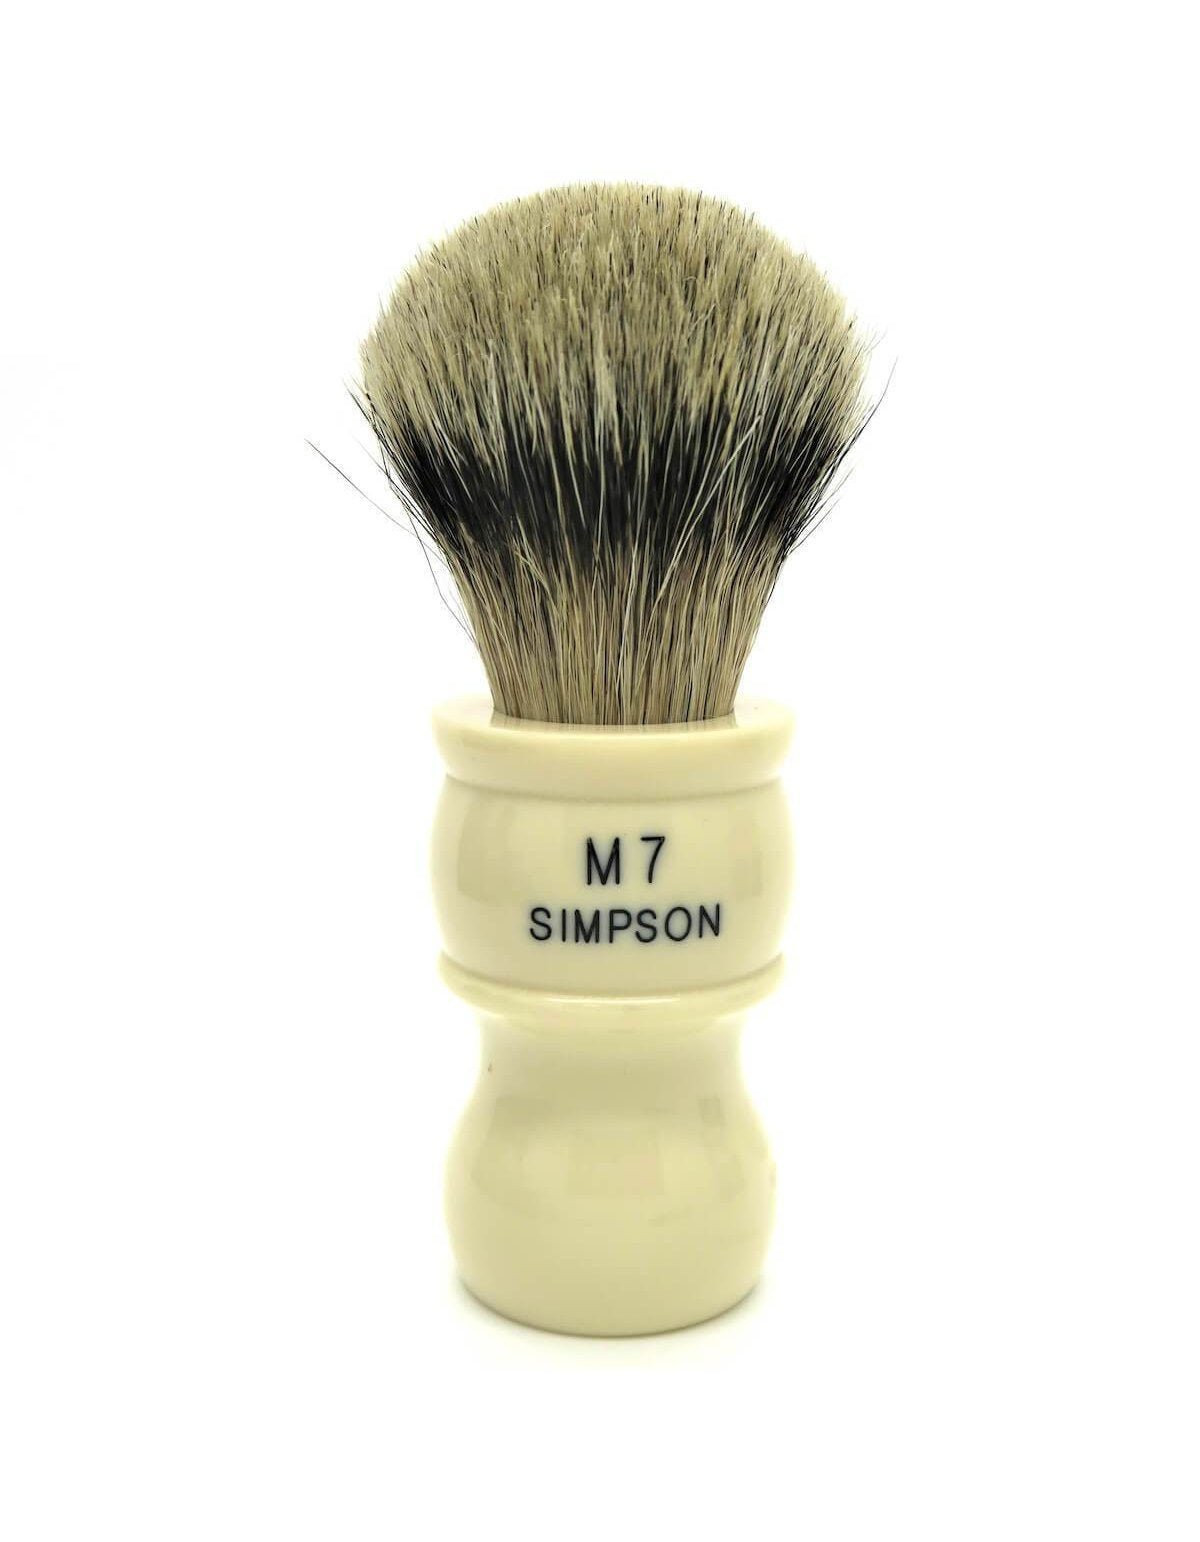 Product image 1 for Simpson M7 Best Badger Shaving Brush, Ivory